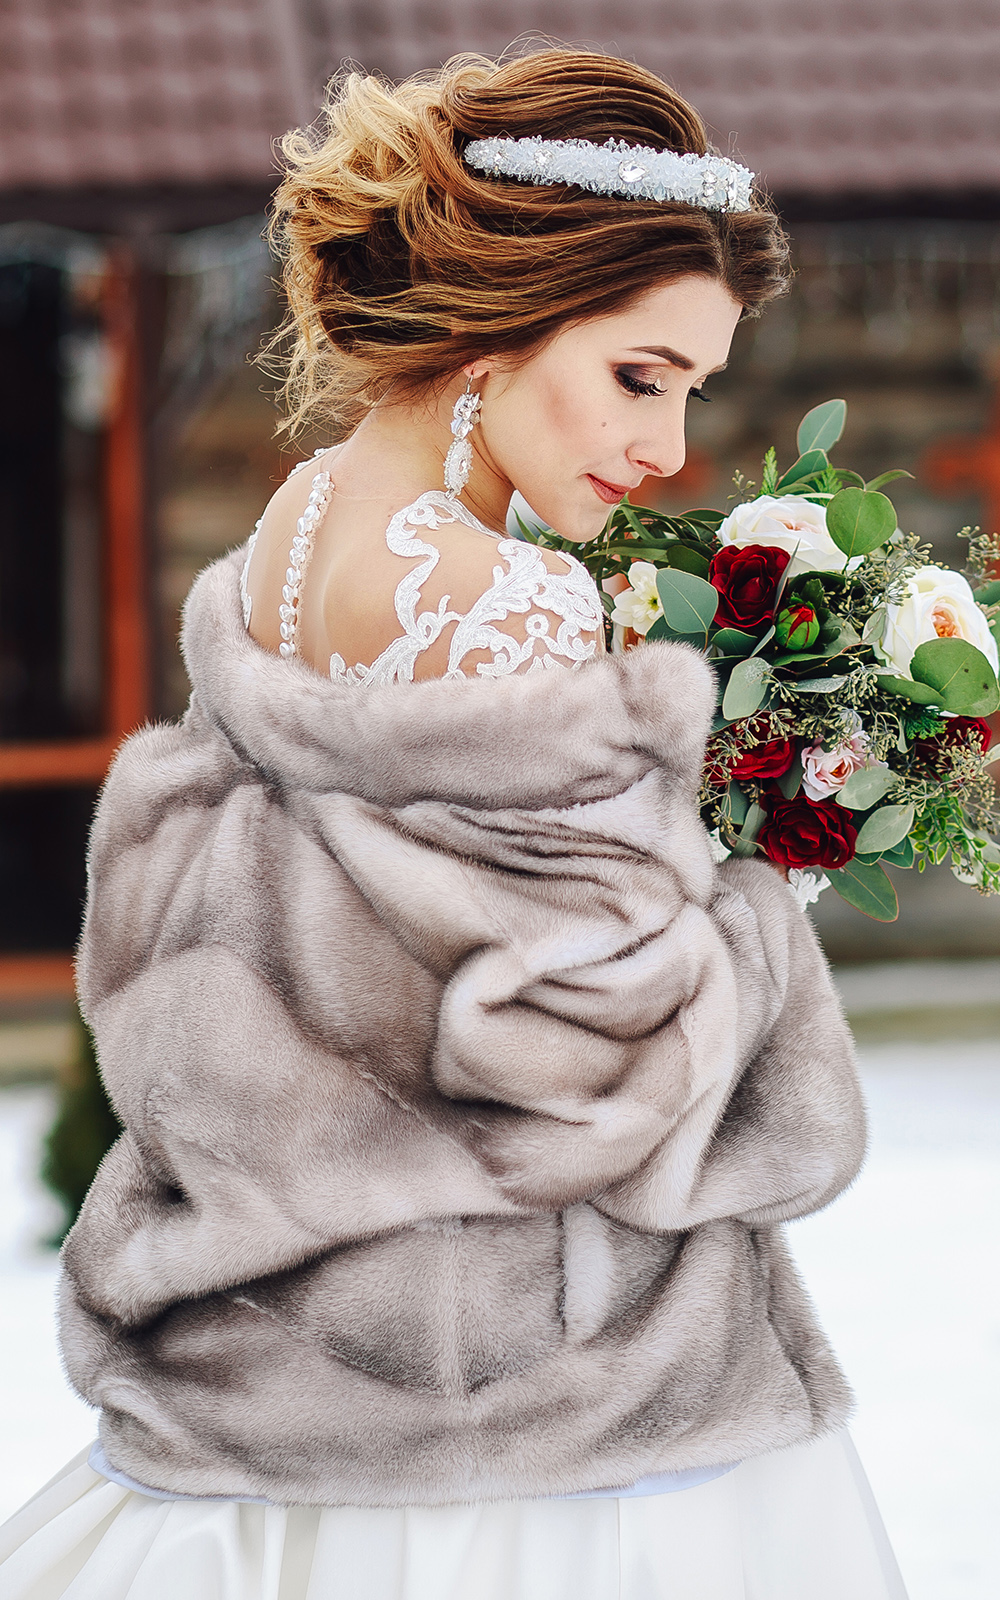 dress for winter wedding